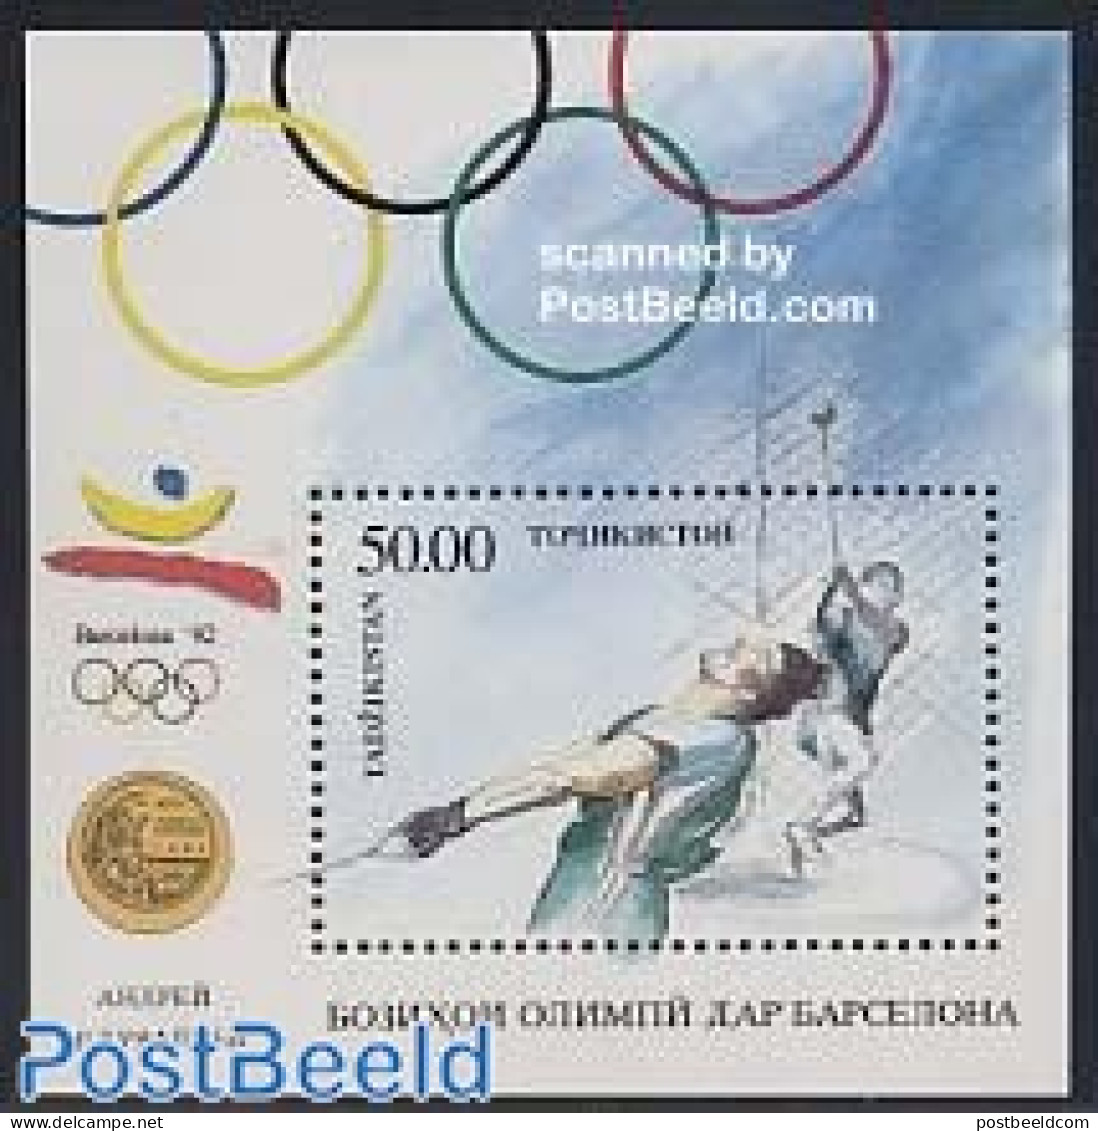 Tajikistan 1993 Olympic Medal S/s, Mint NH, Sport - Olympic Games - Tadzjikistan